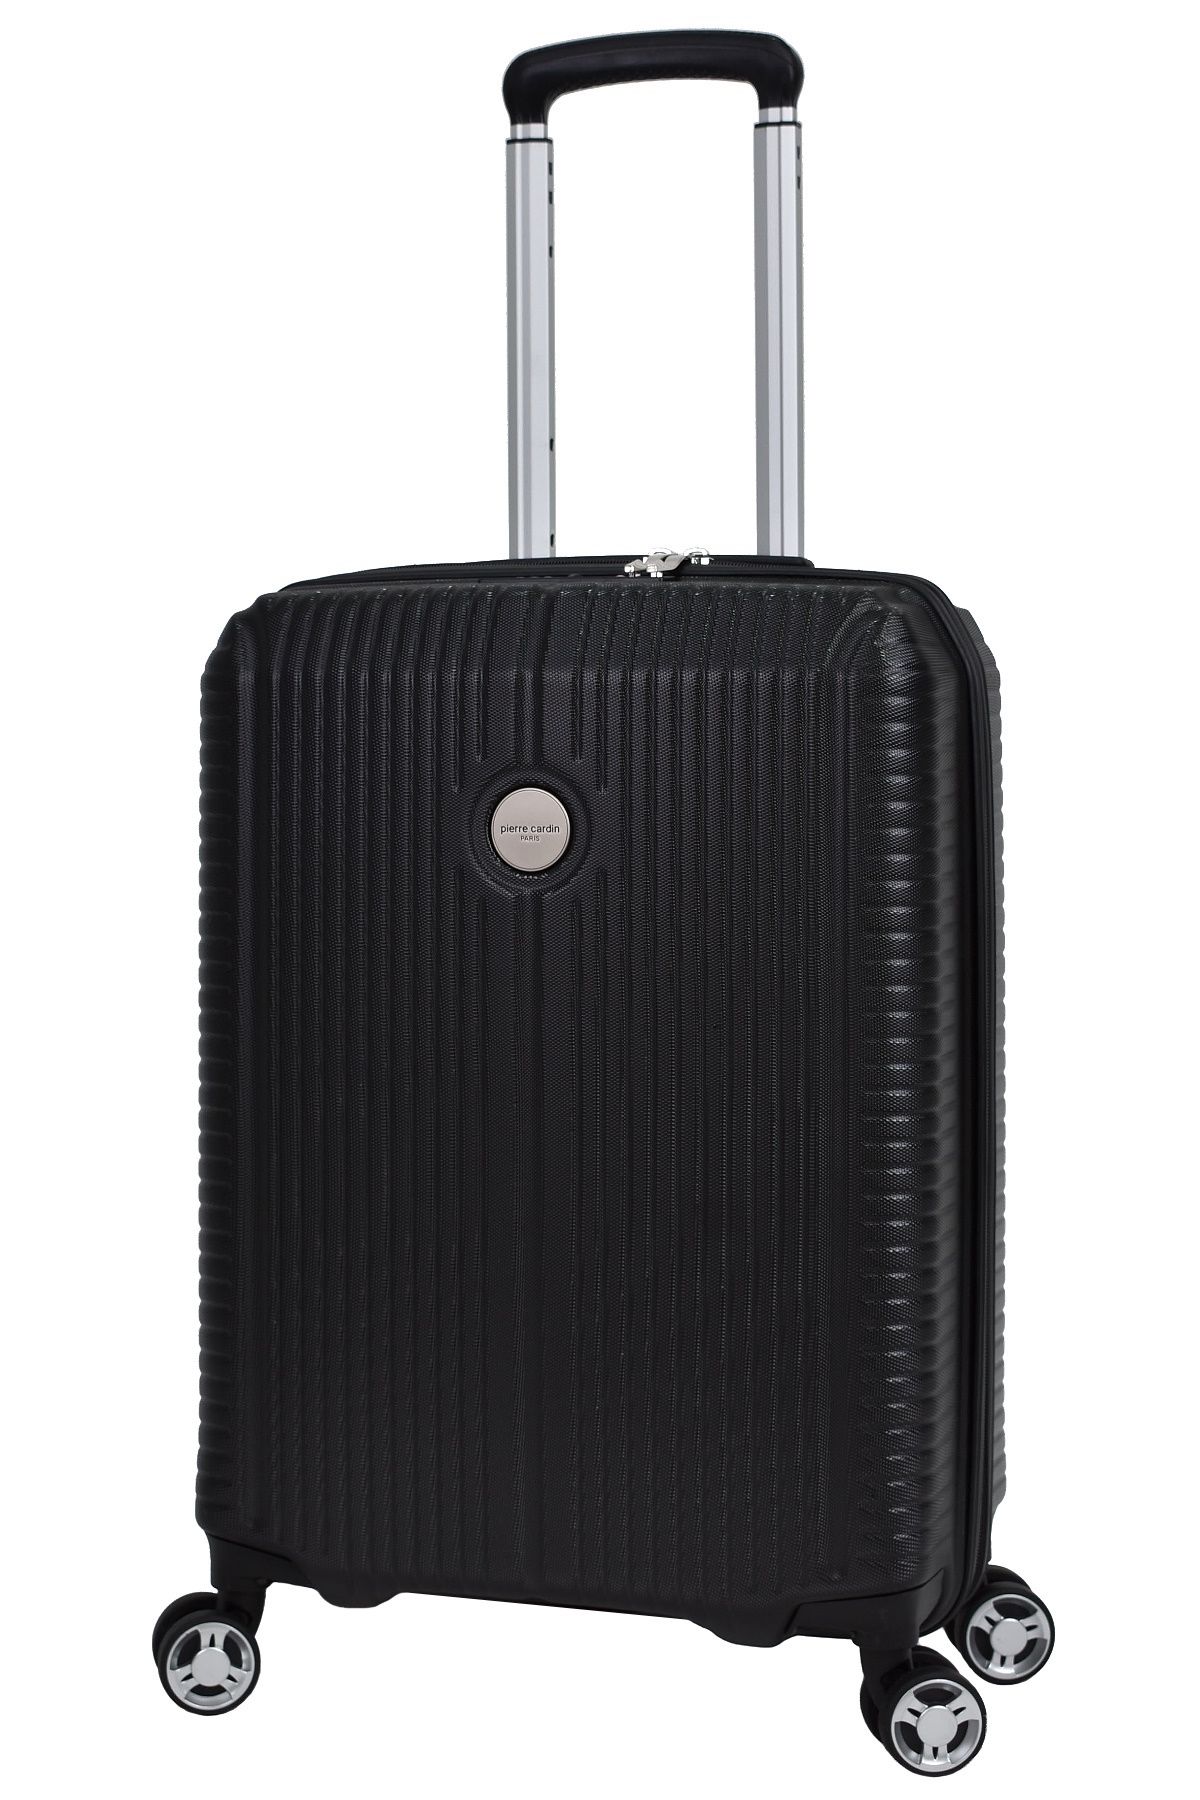 Pierre Cardin چمدان اندازه کابین لوکس PC6500